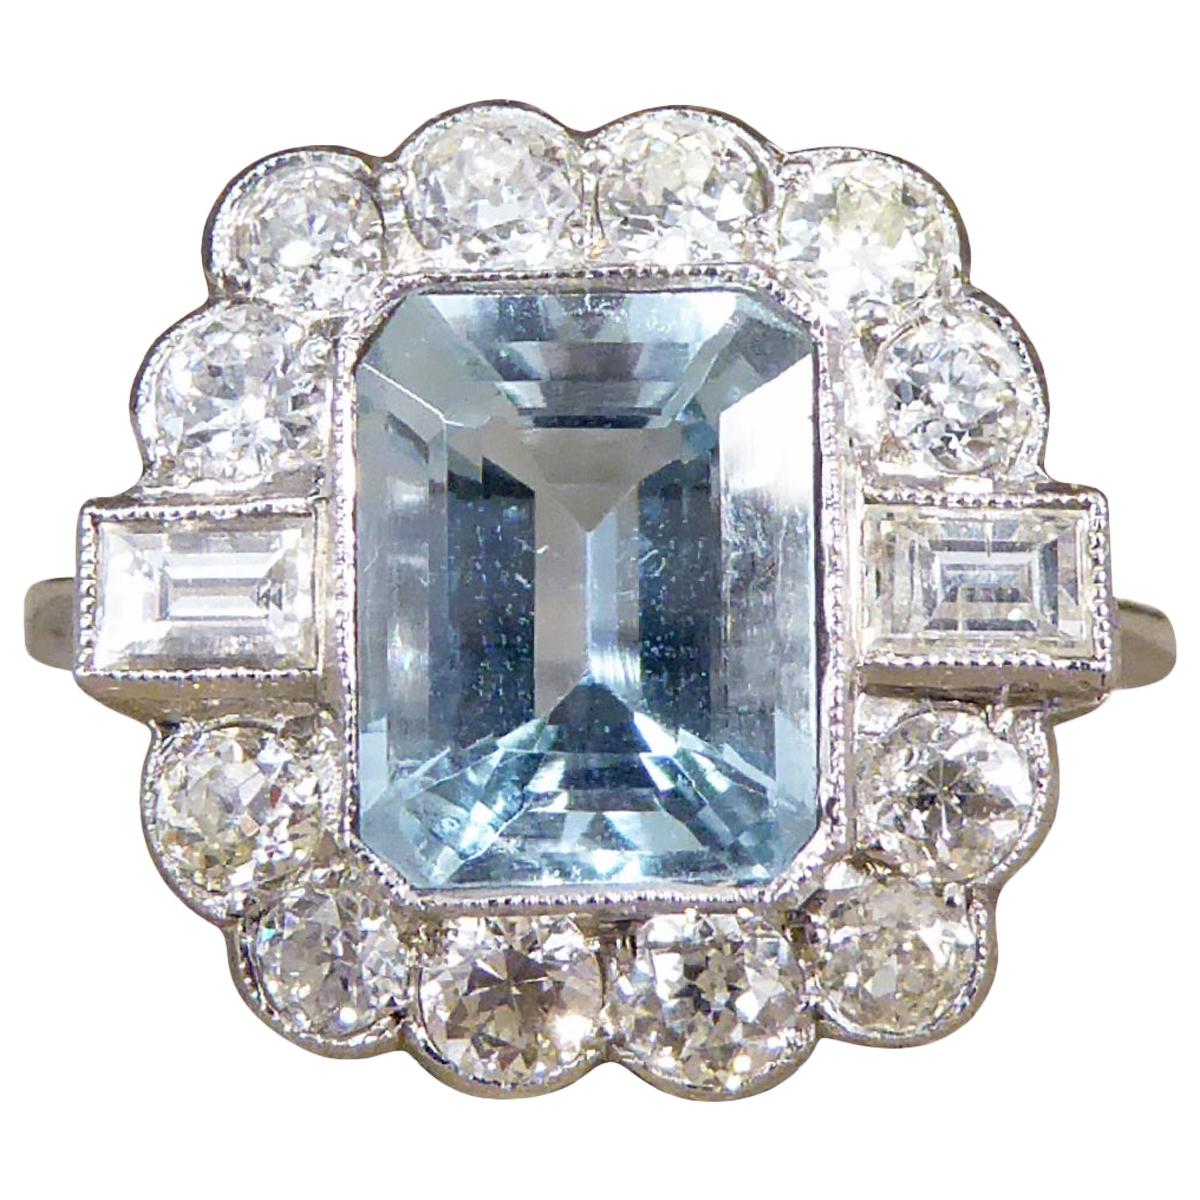 Contemporary Edwardian Style 1.60 Carat Aquamarine and Diamond Ring in Platinum